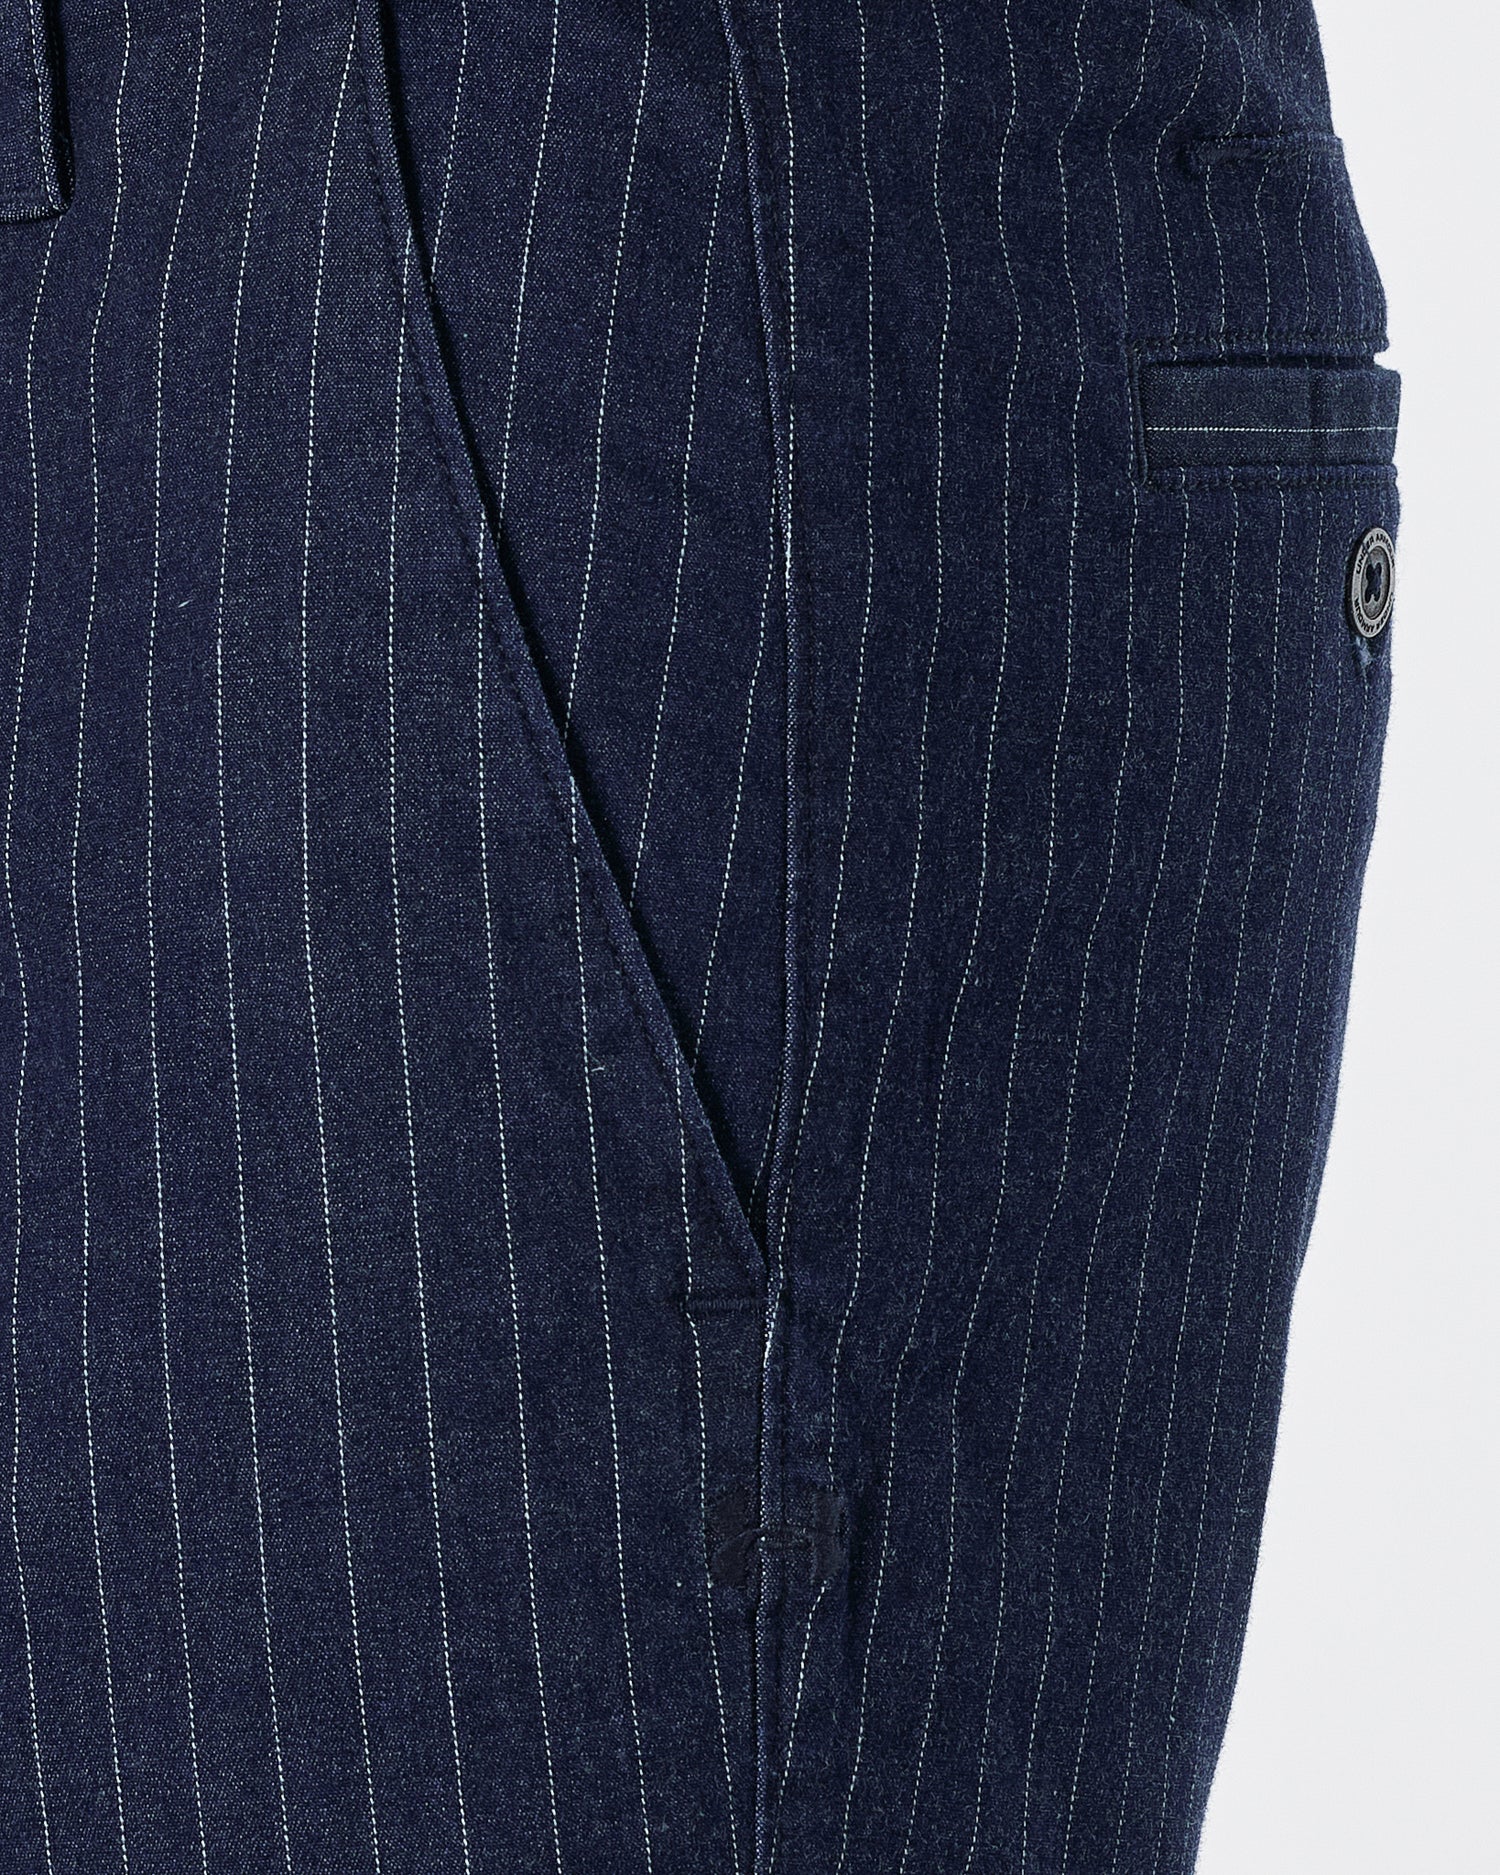 UA Striped Men Short Pants 18.50